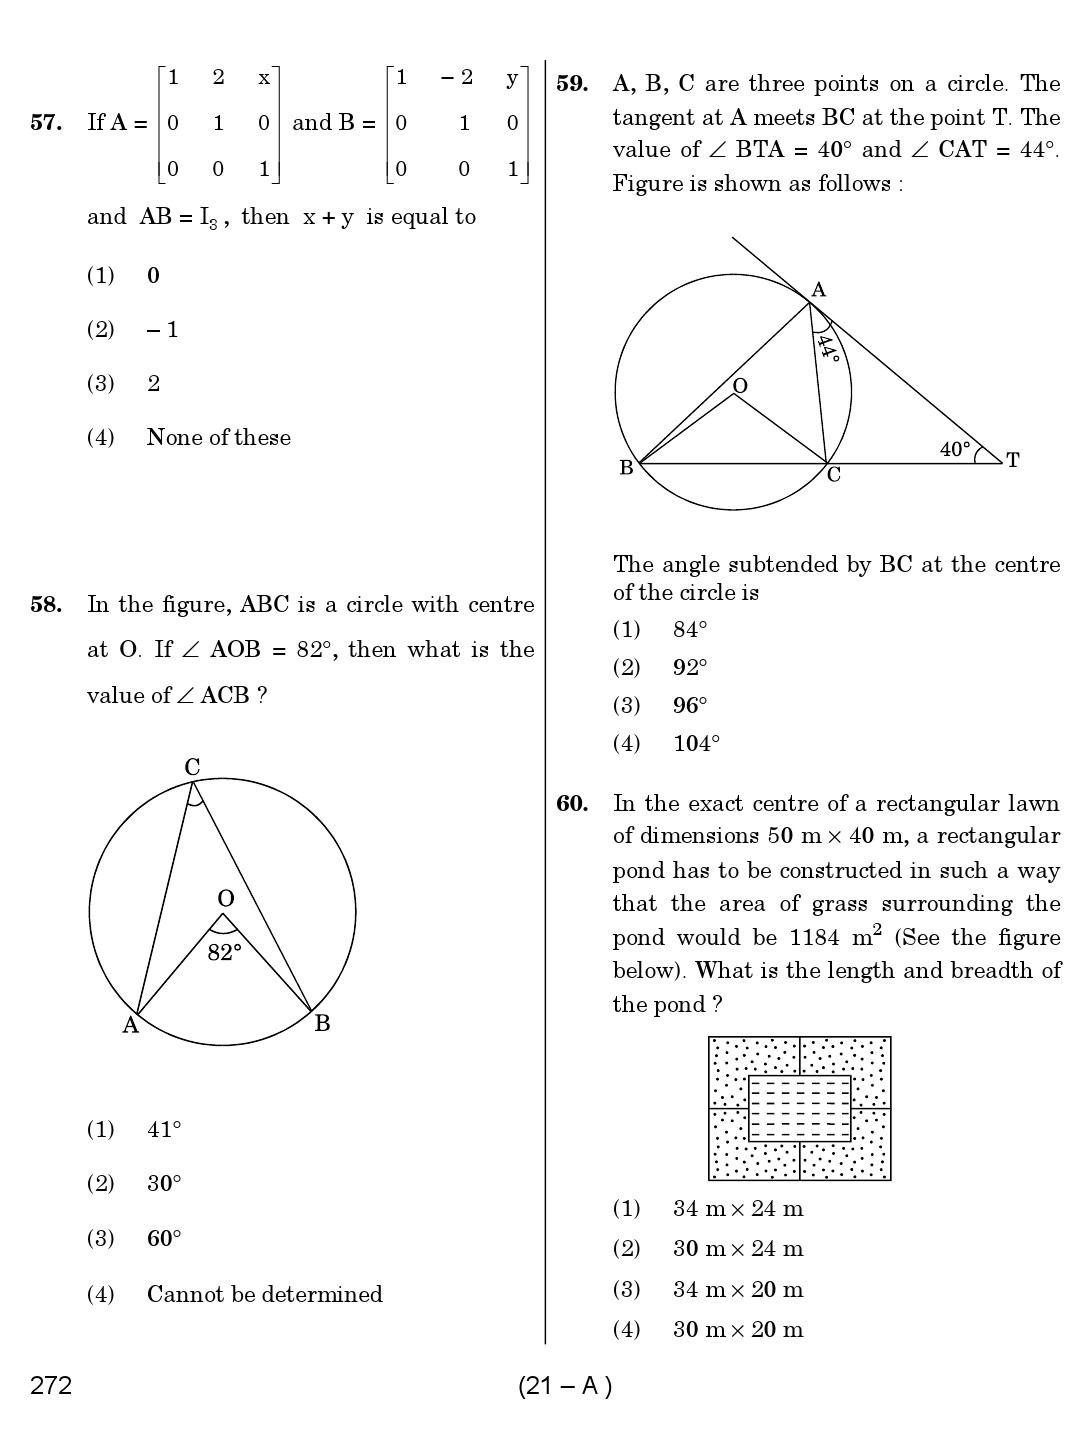 Karnataka PSC Mathematics Teacher Exam Sample Question Paper Subject code 272 21